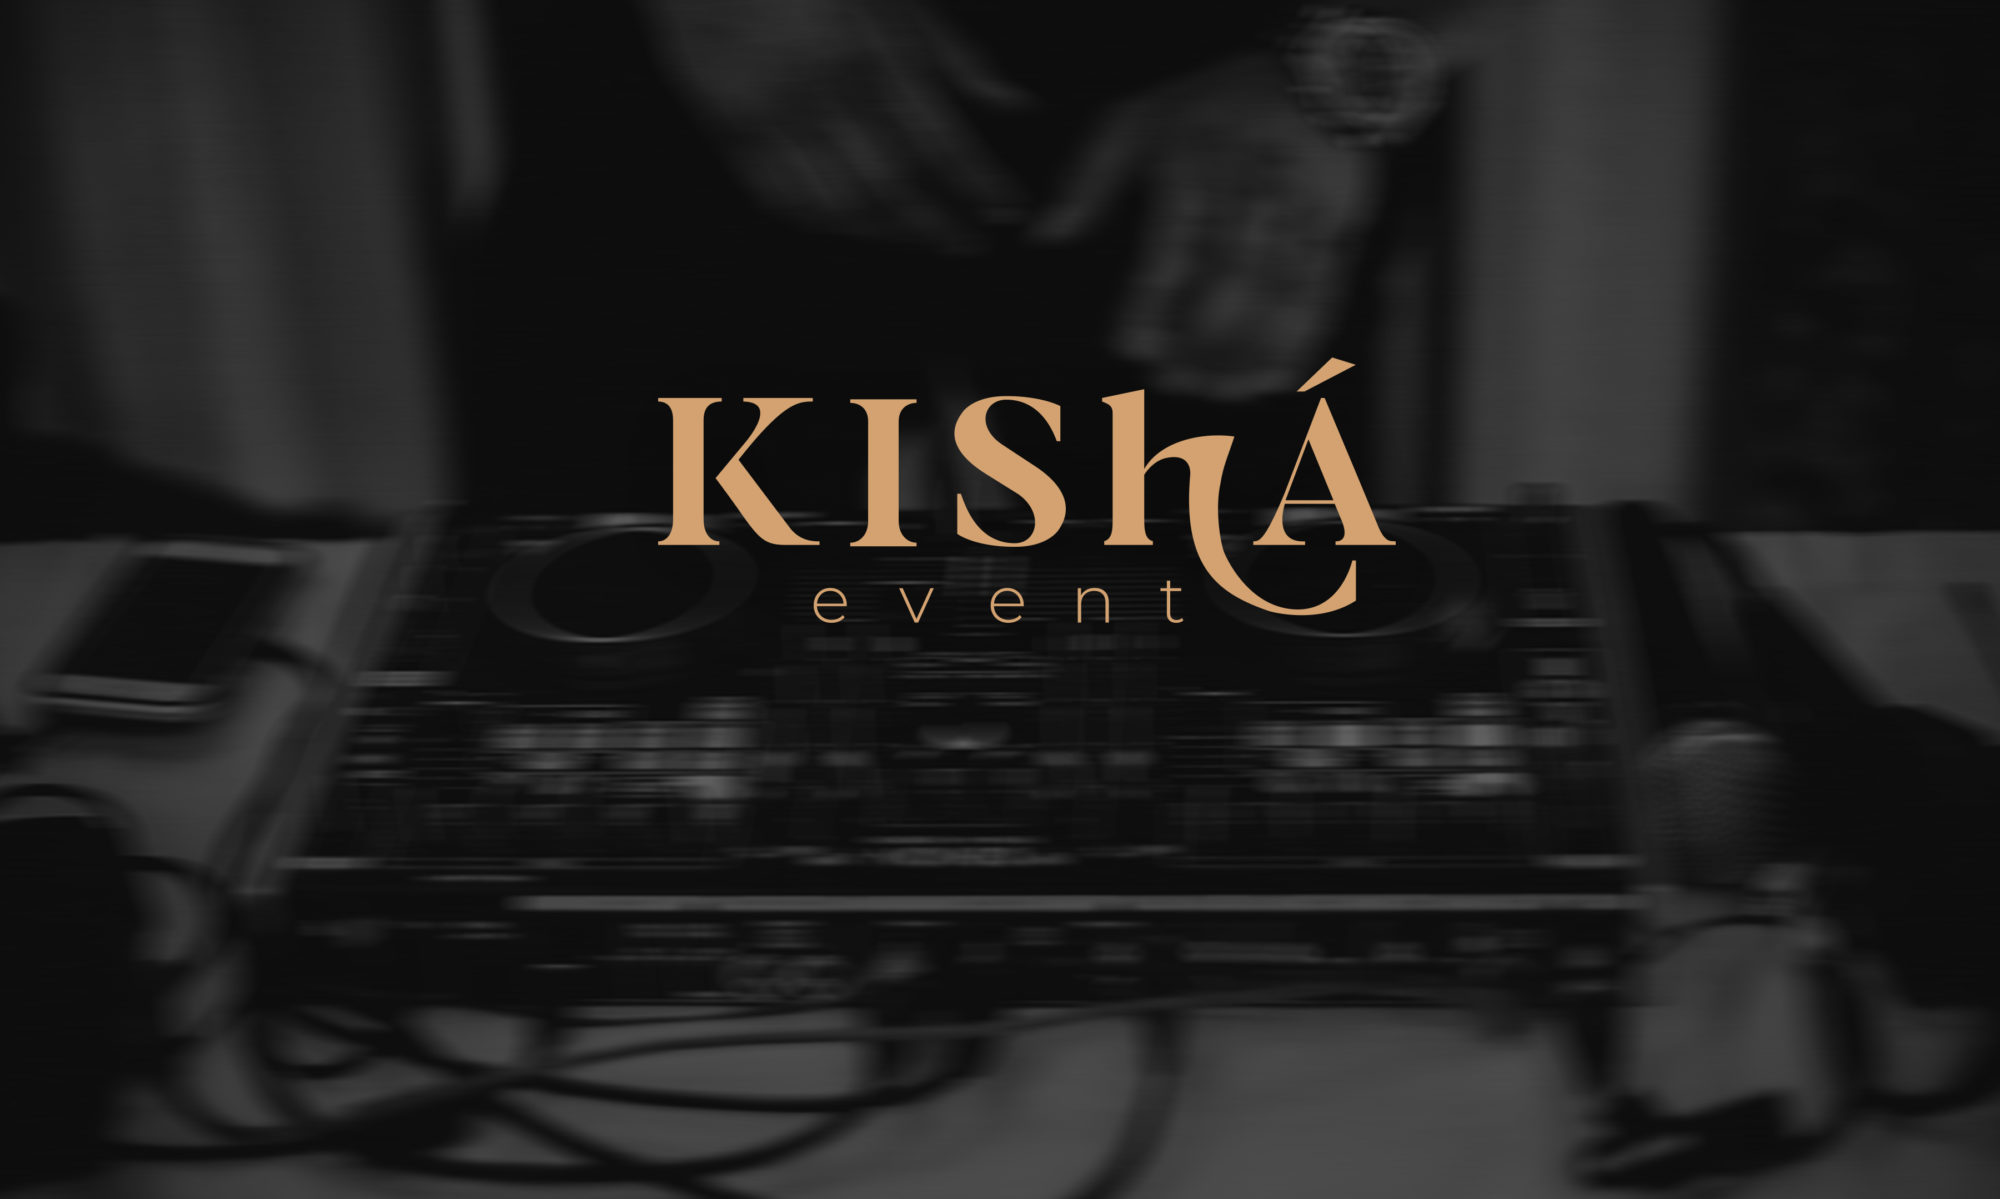 KIShÁ event